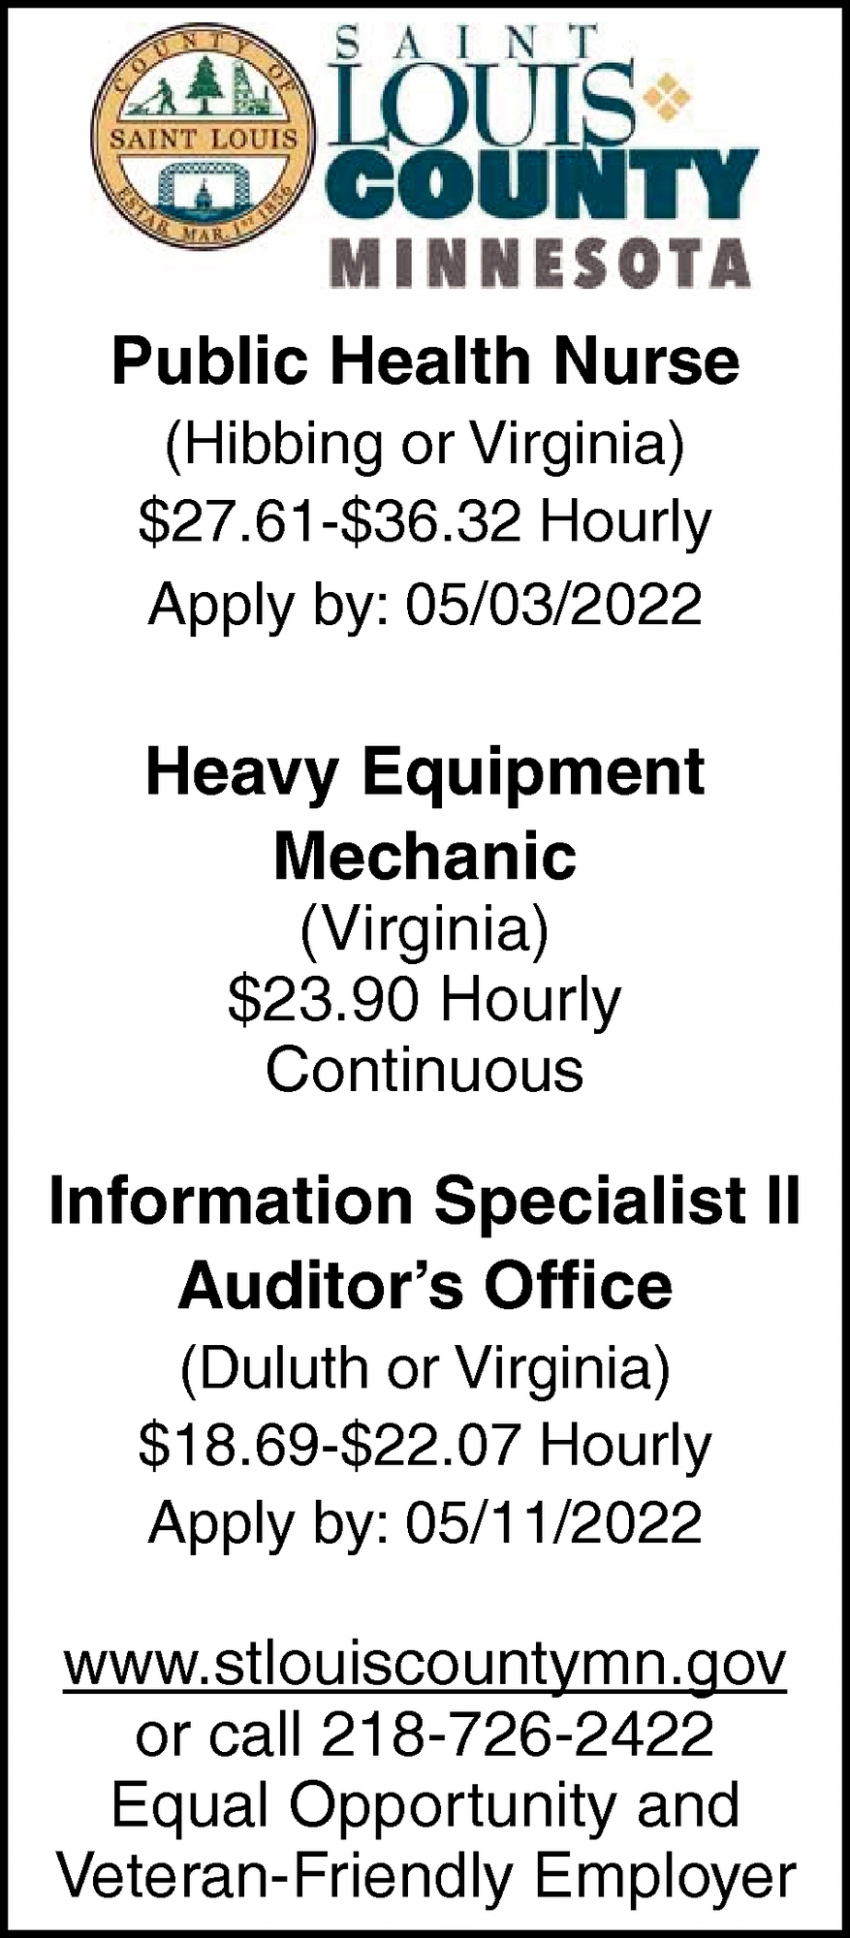 Public Health Nurse, Heavy Equipment Mechanic, Information Specialist II